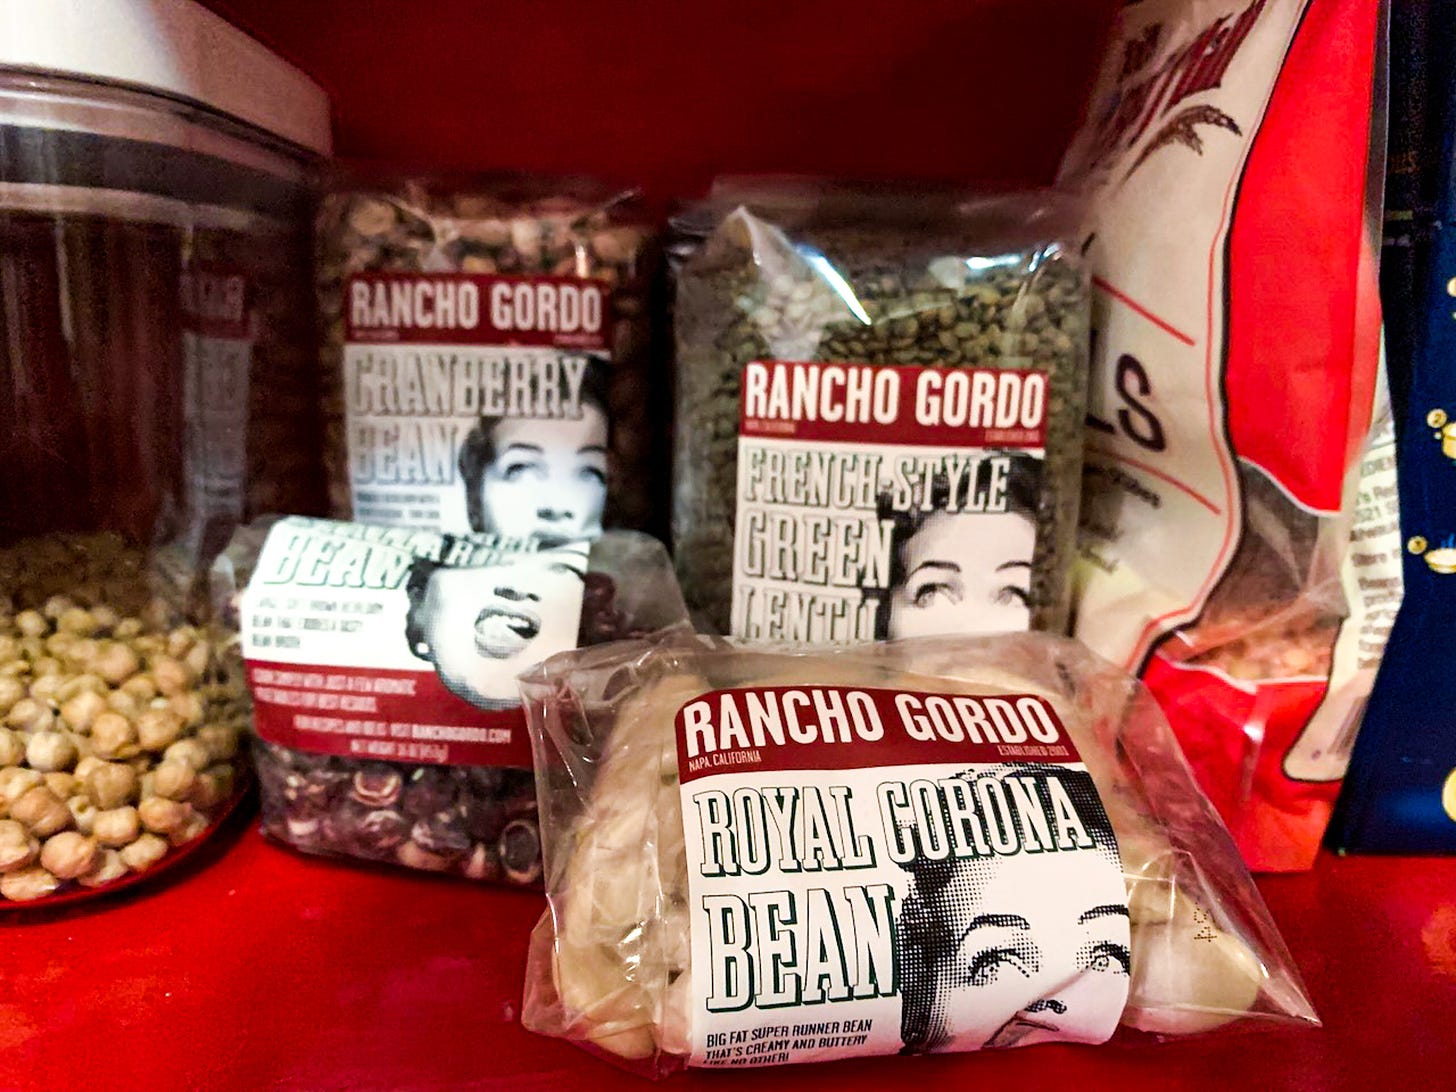 Bags of Rancho Gordo beans